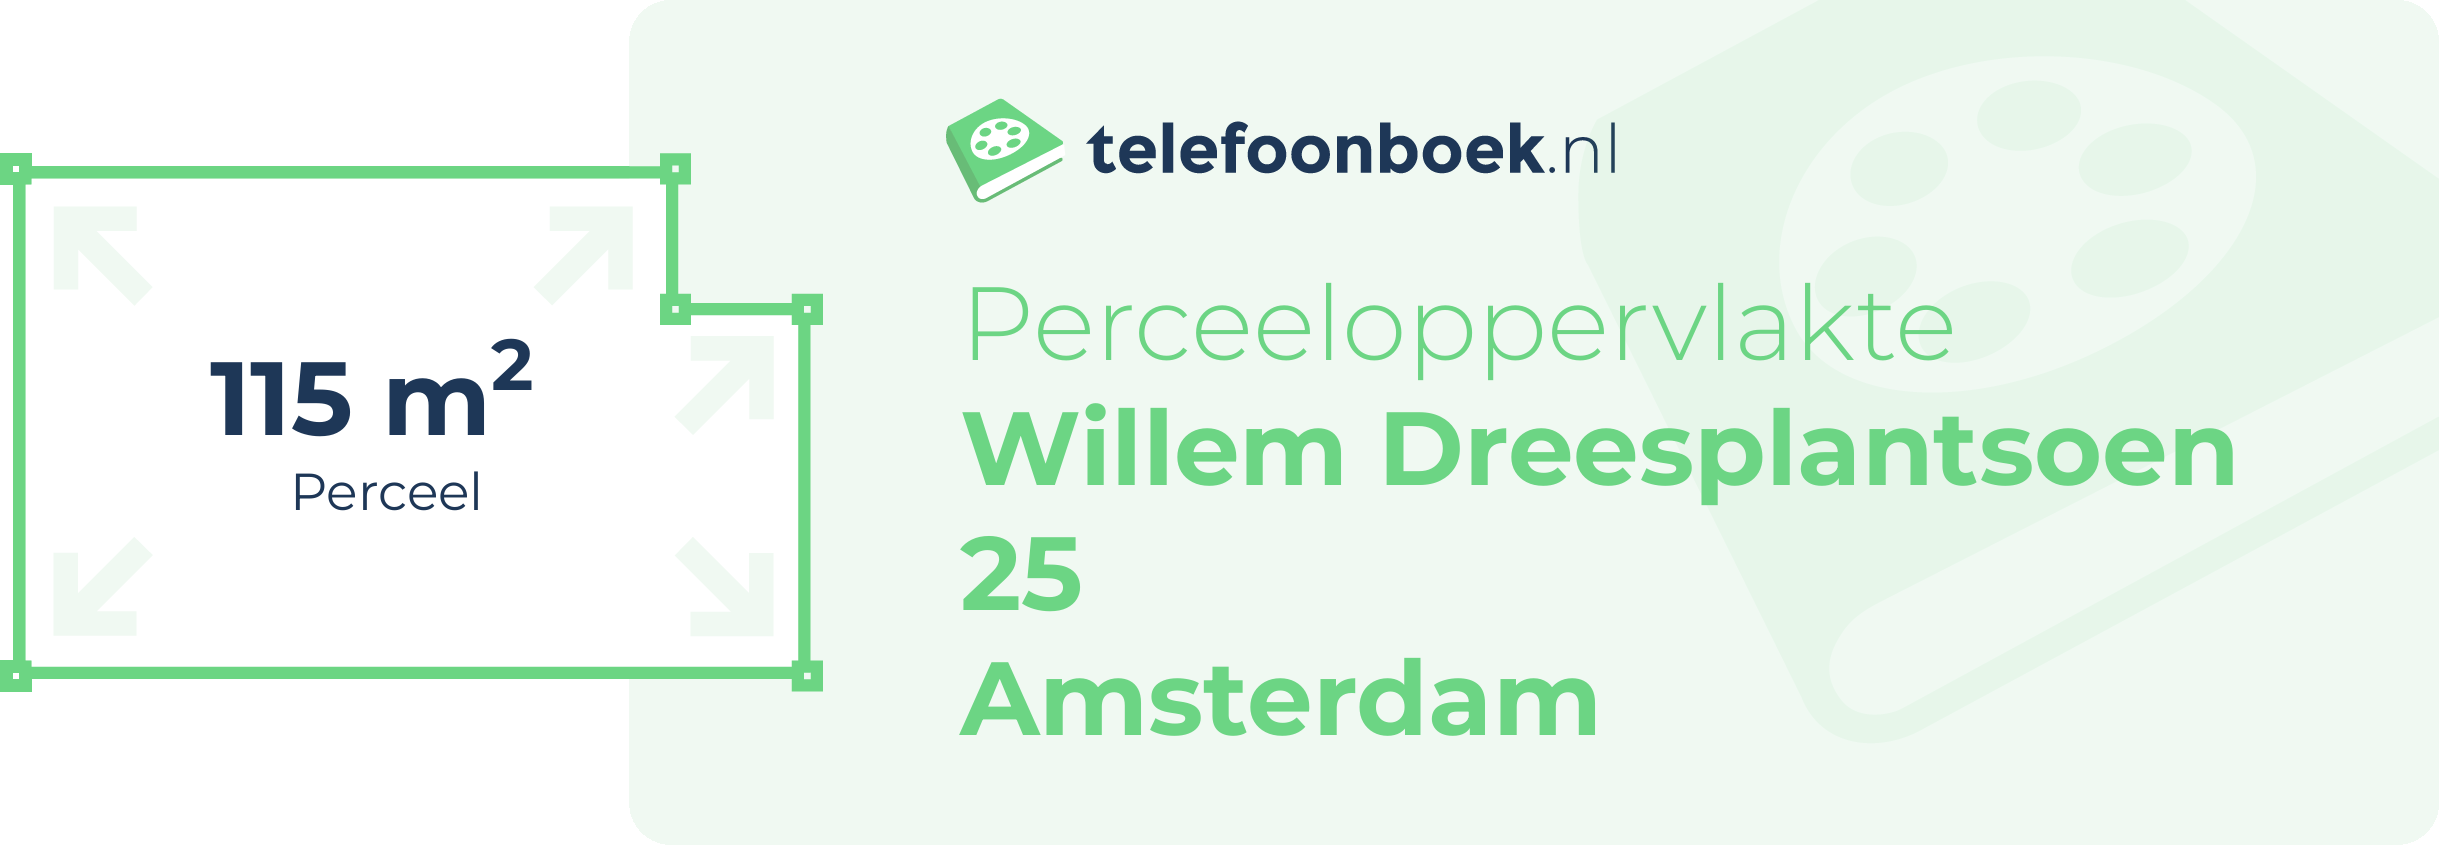 Perceeloppervlakte Willem Dreesplantsoen 25 Amsterdam